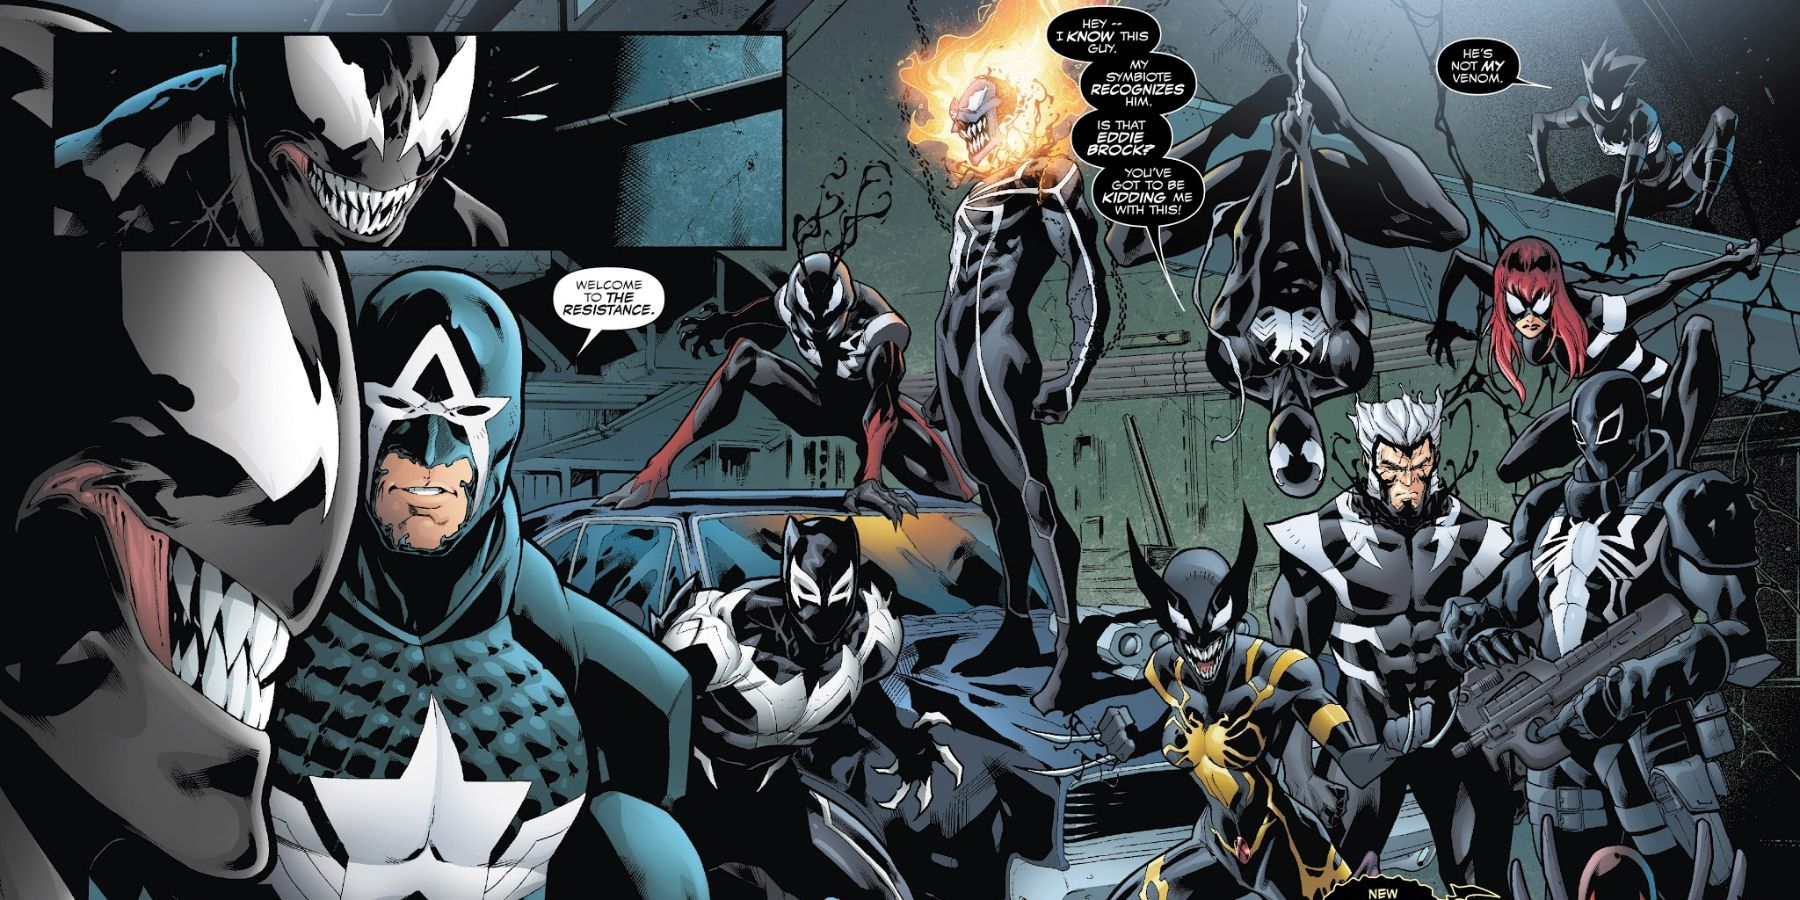 Venom meeting a venomized resistance group of Marvel heroes in Venomverse